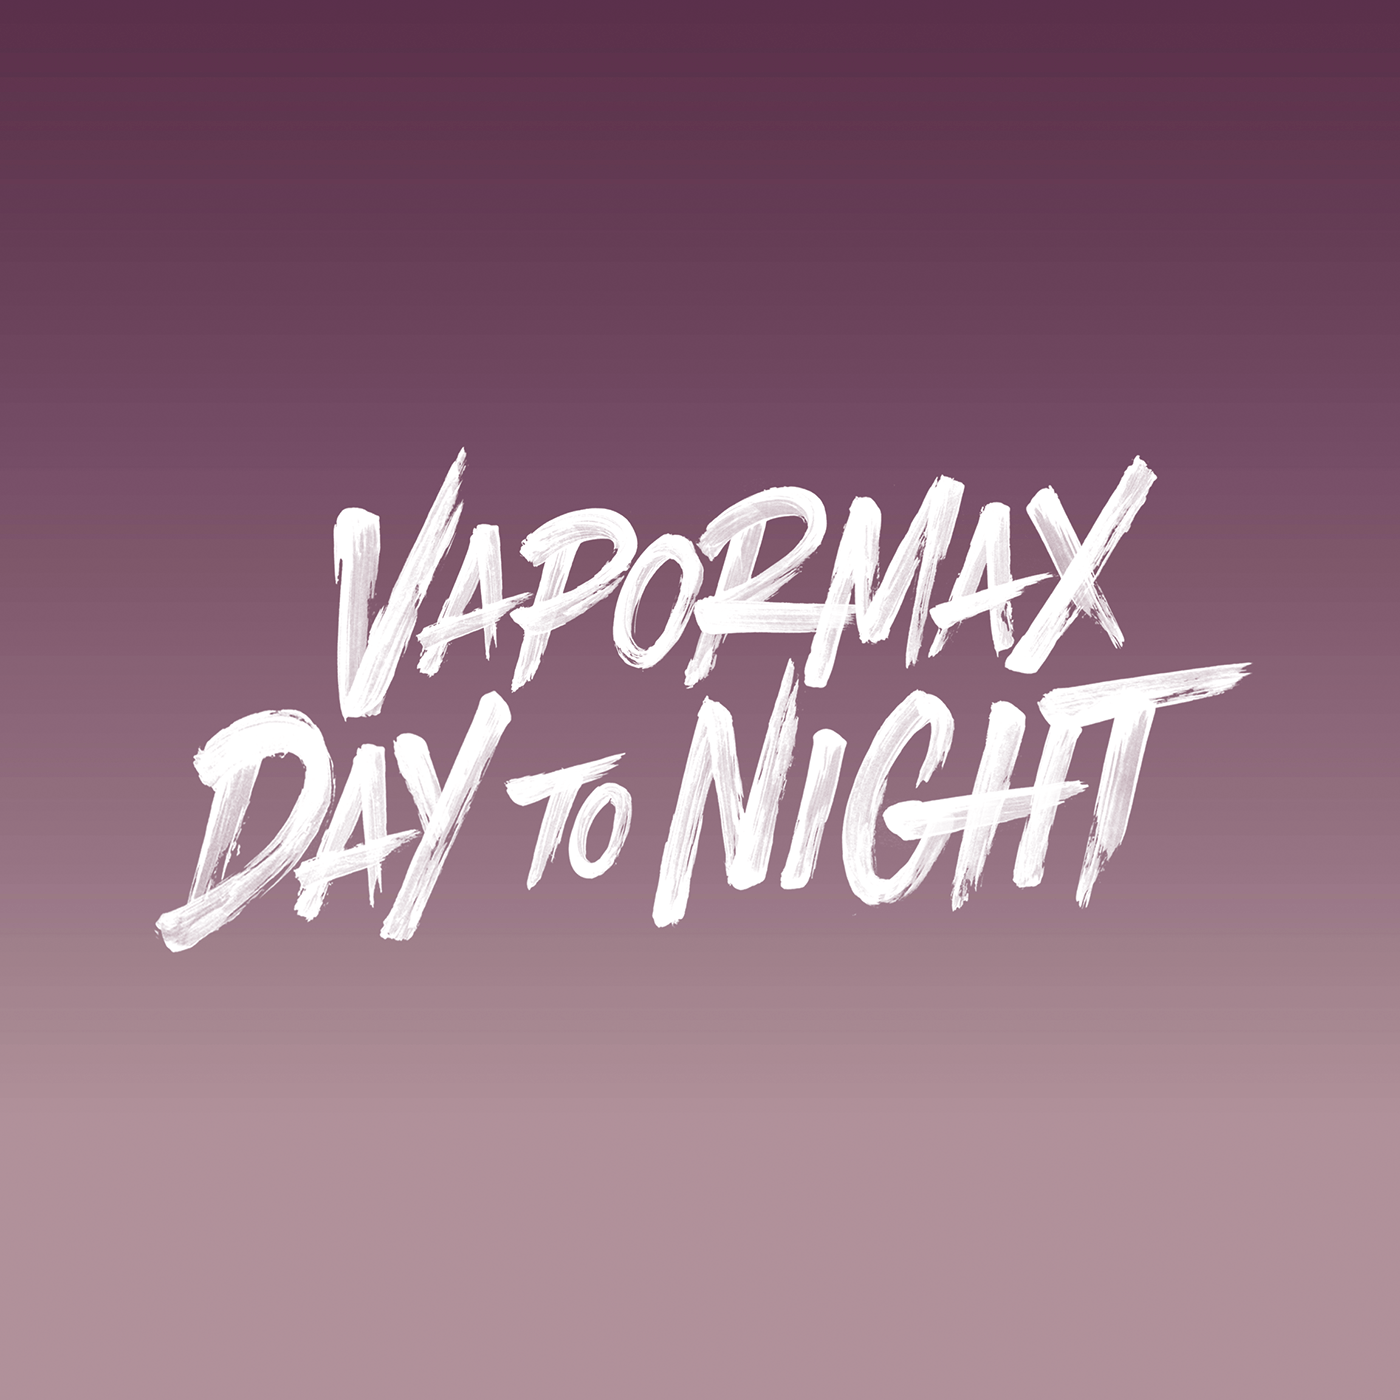 Niike Vapor Max Logo - Nike VaporMax Day To Night